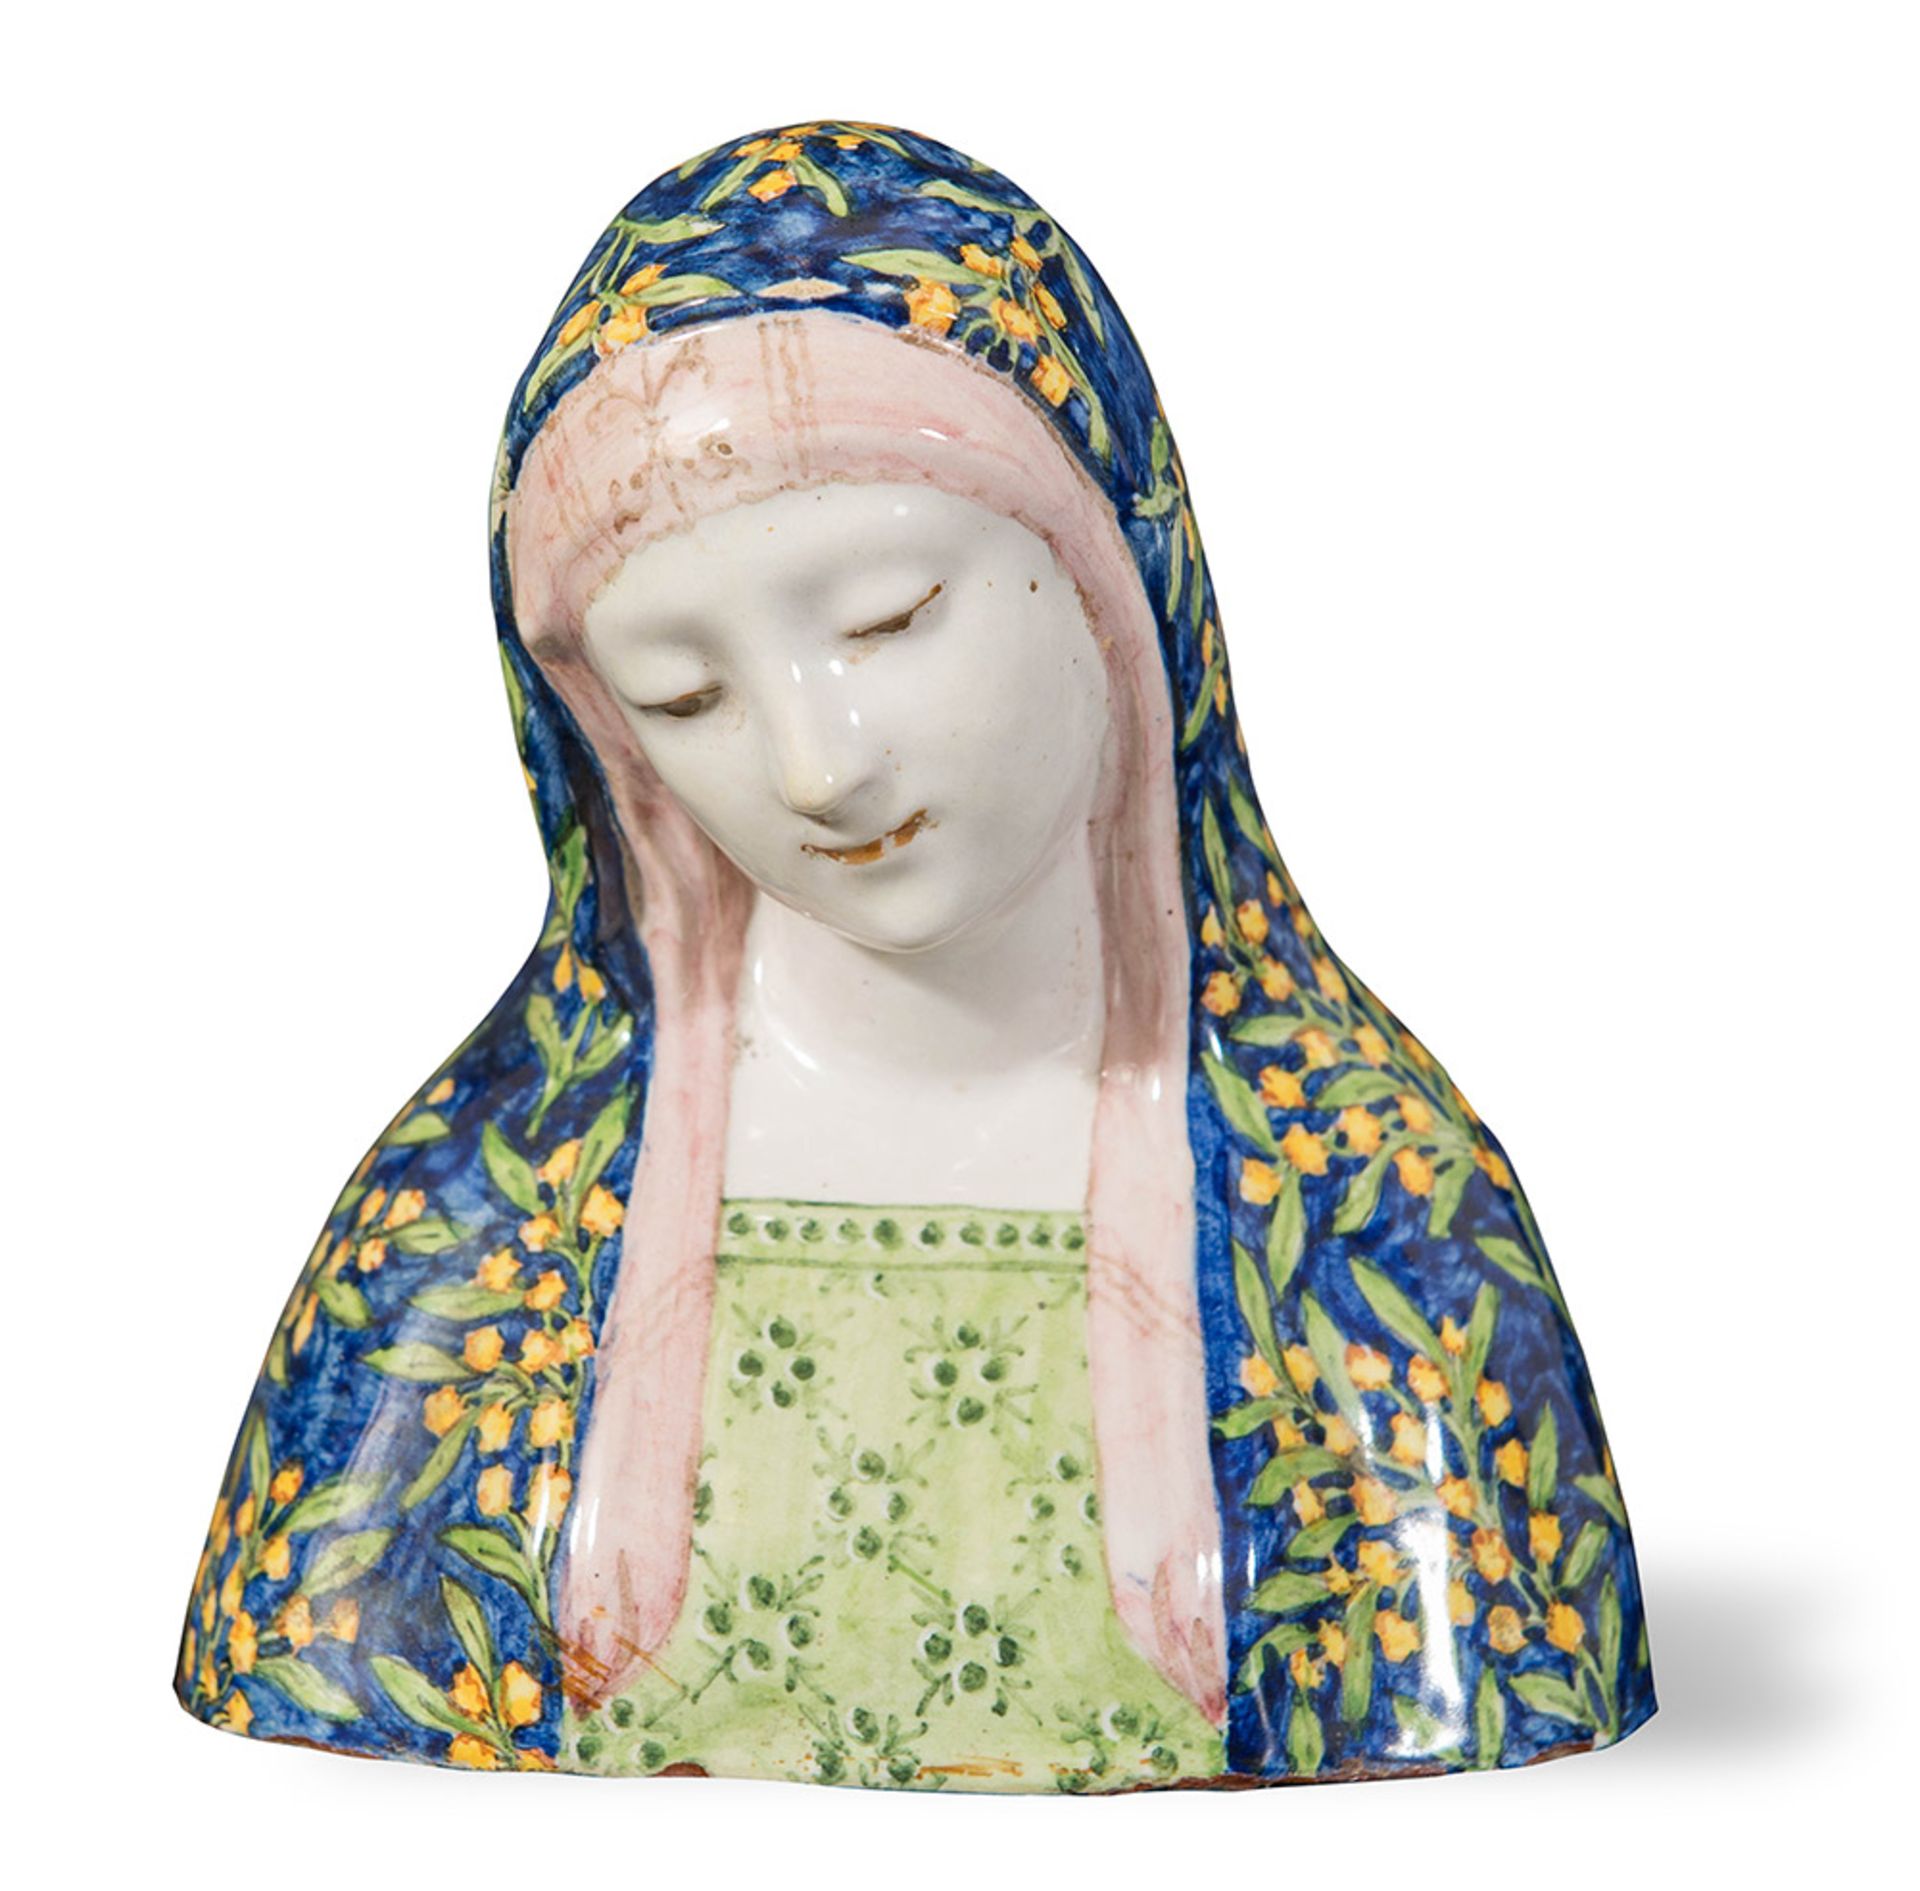 Minghetti polychromed ceramic bust, "Madonna", mark: '*Bologna (Italia)’, Minghetti Manufacture